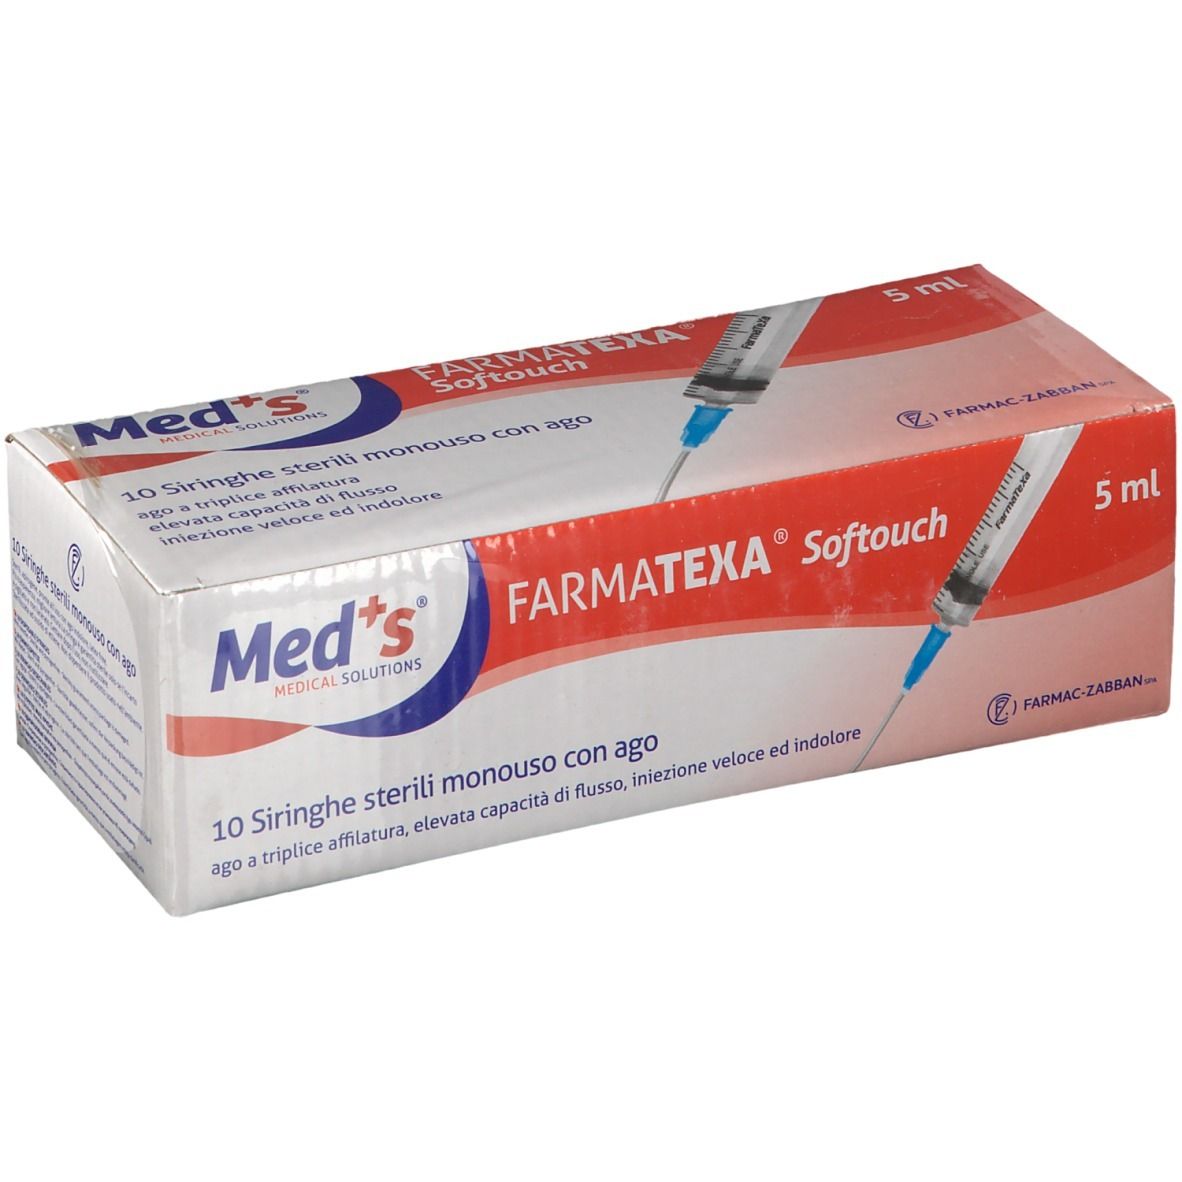 Image of Farmatexa® Softouch Siringhe 5 ml